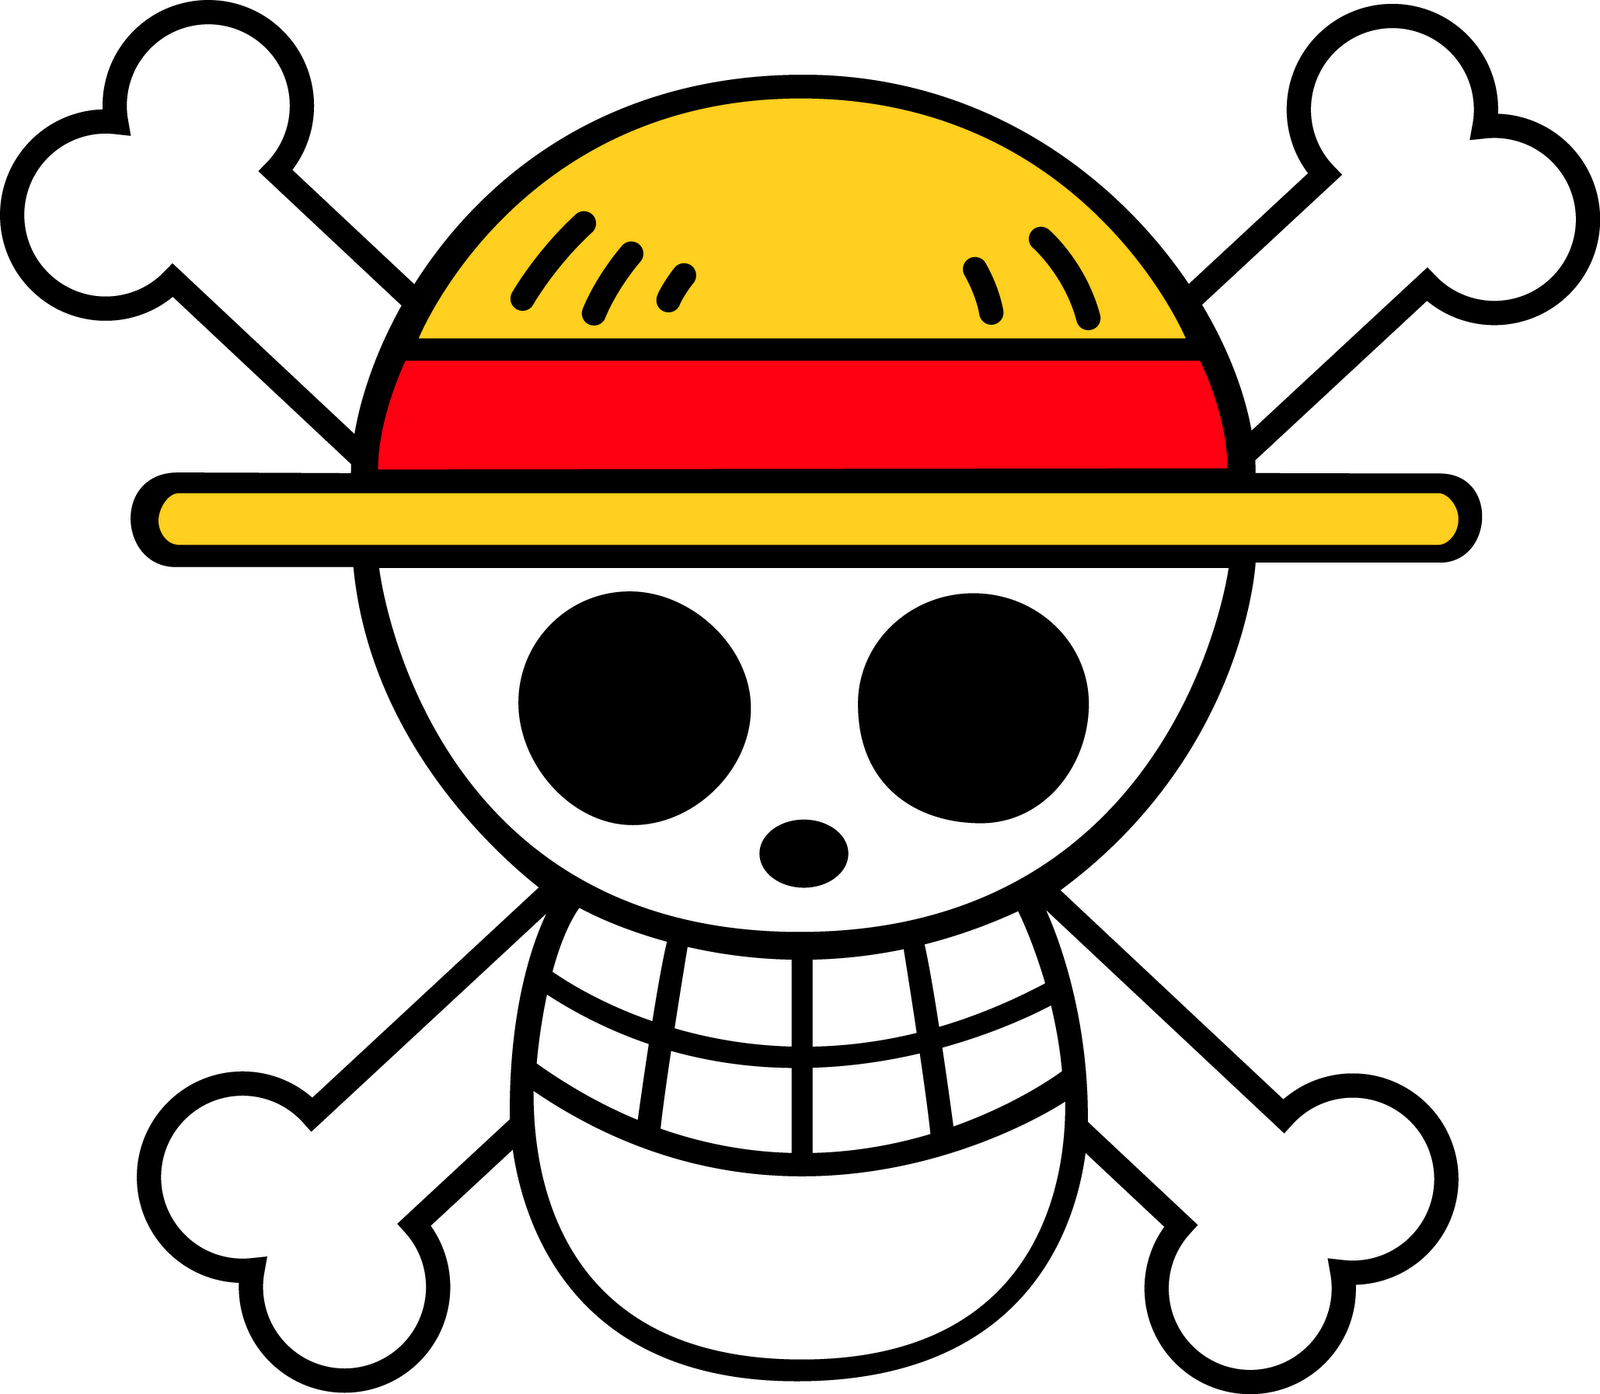 Pirates pirate hat